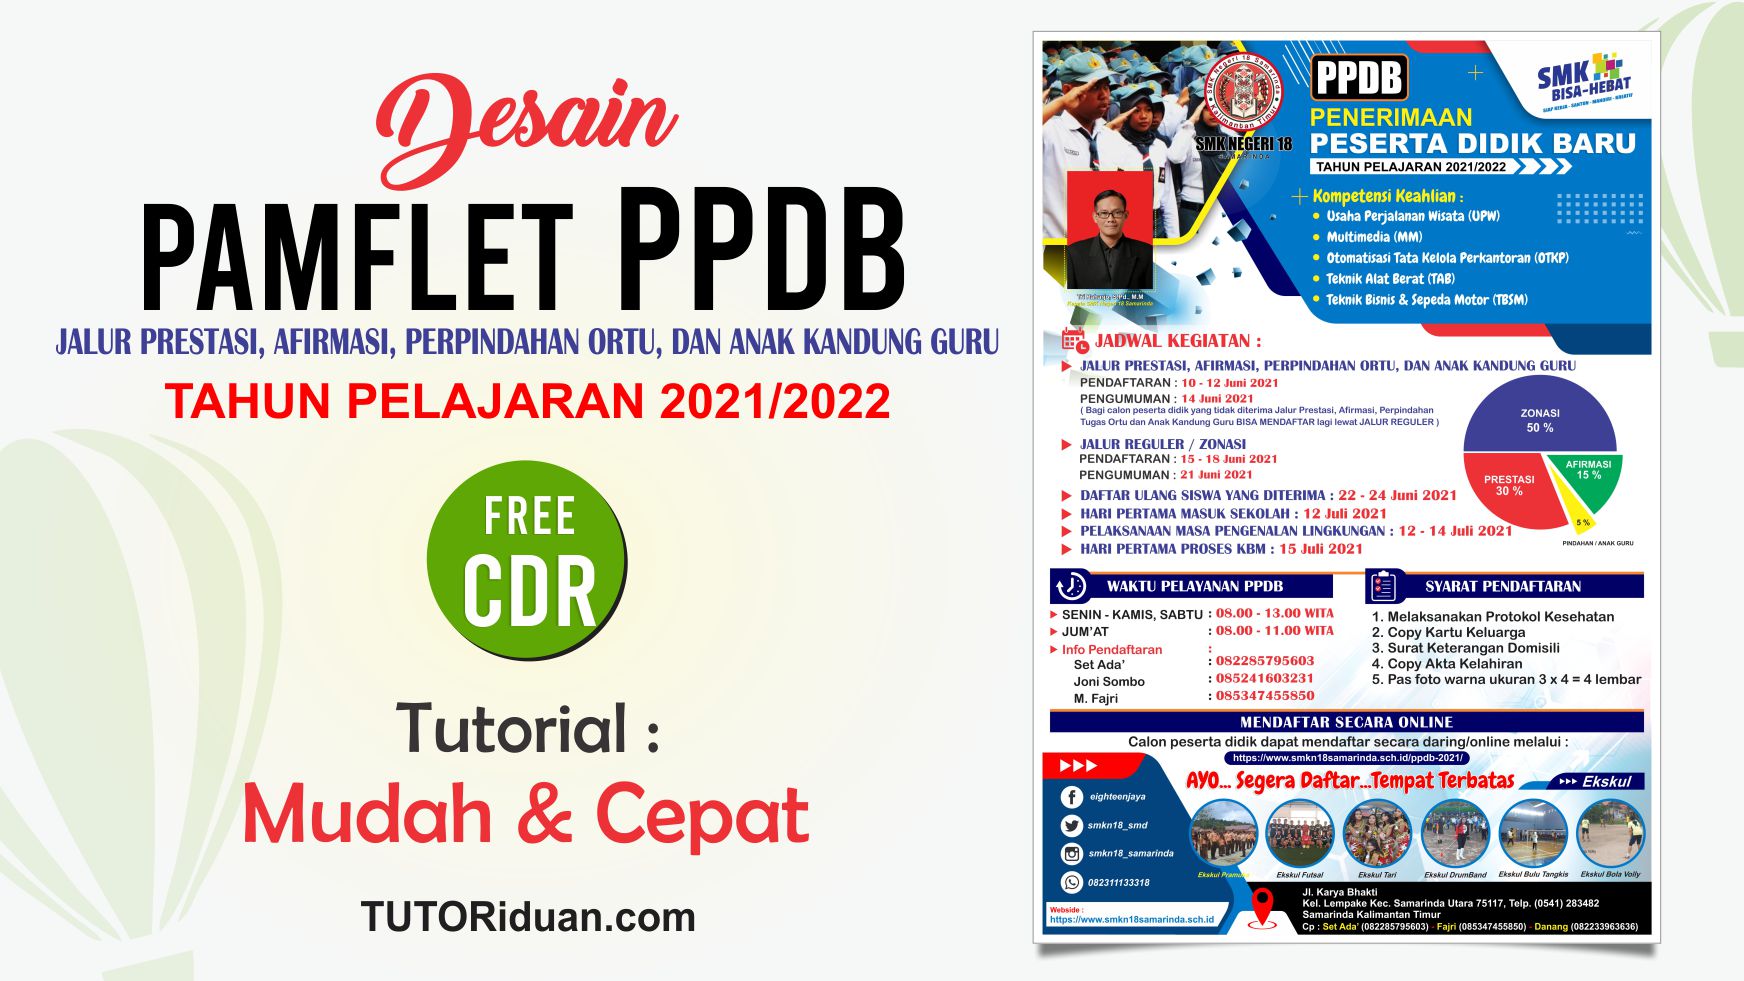 Desain Pamflet Ppdb Sma Smk 2021 Format Coreldraw Free Cdr Tutoriduan Com